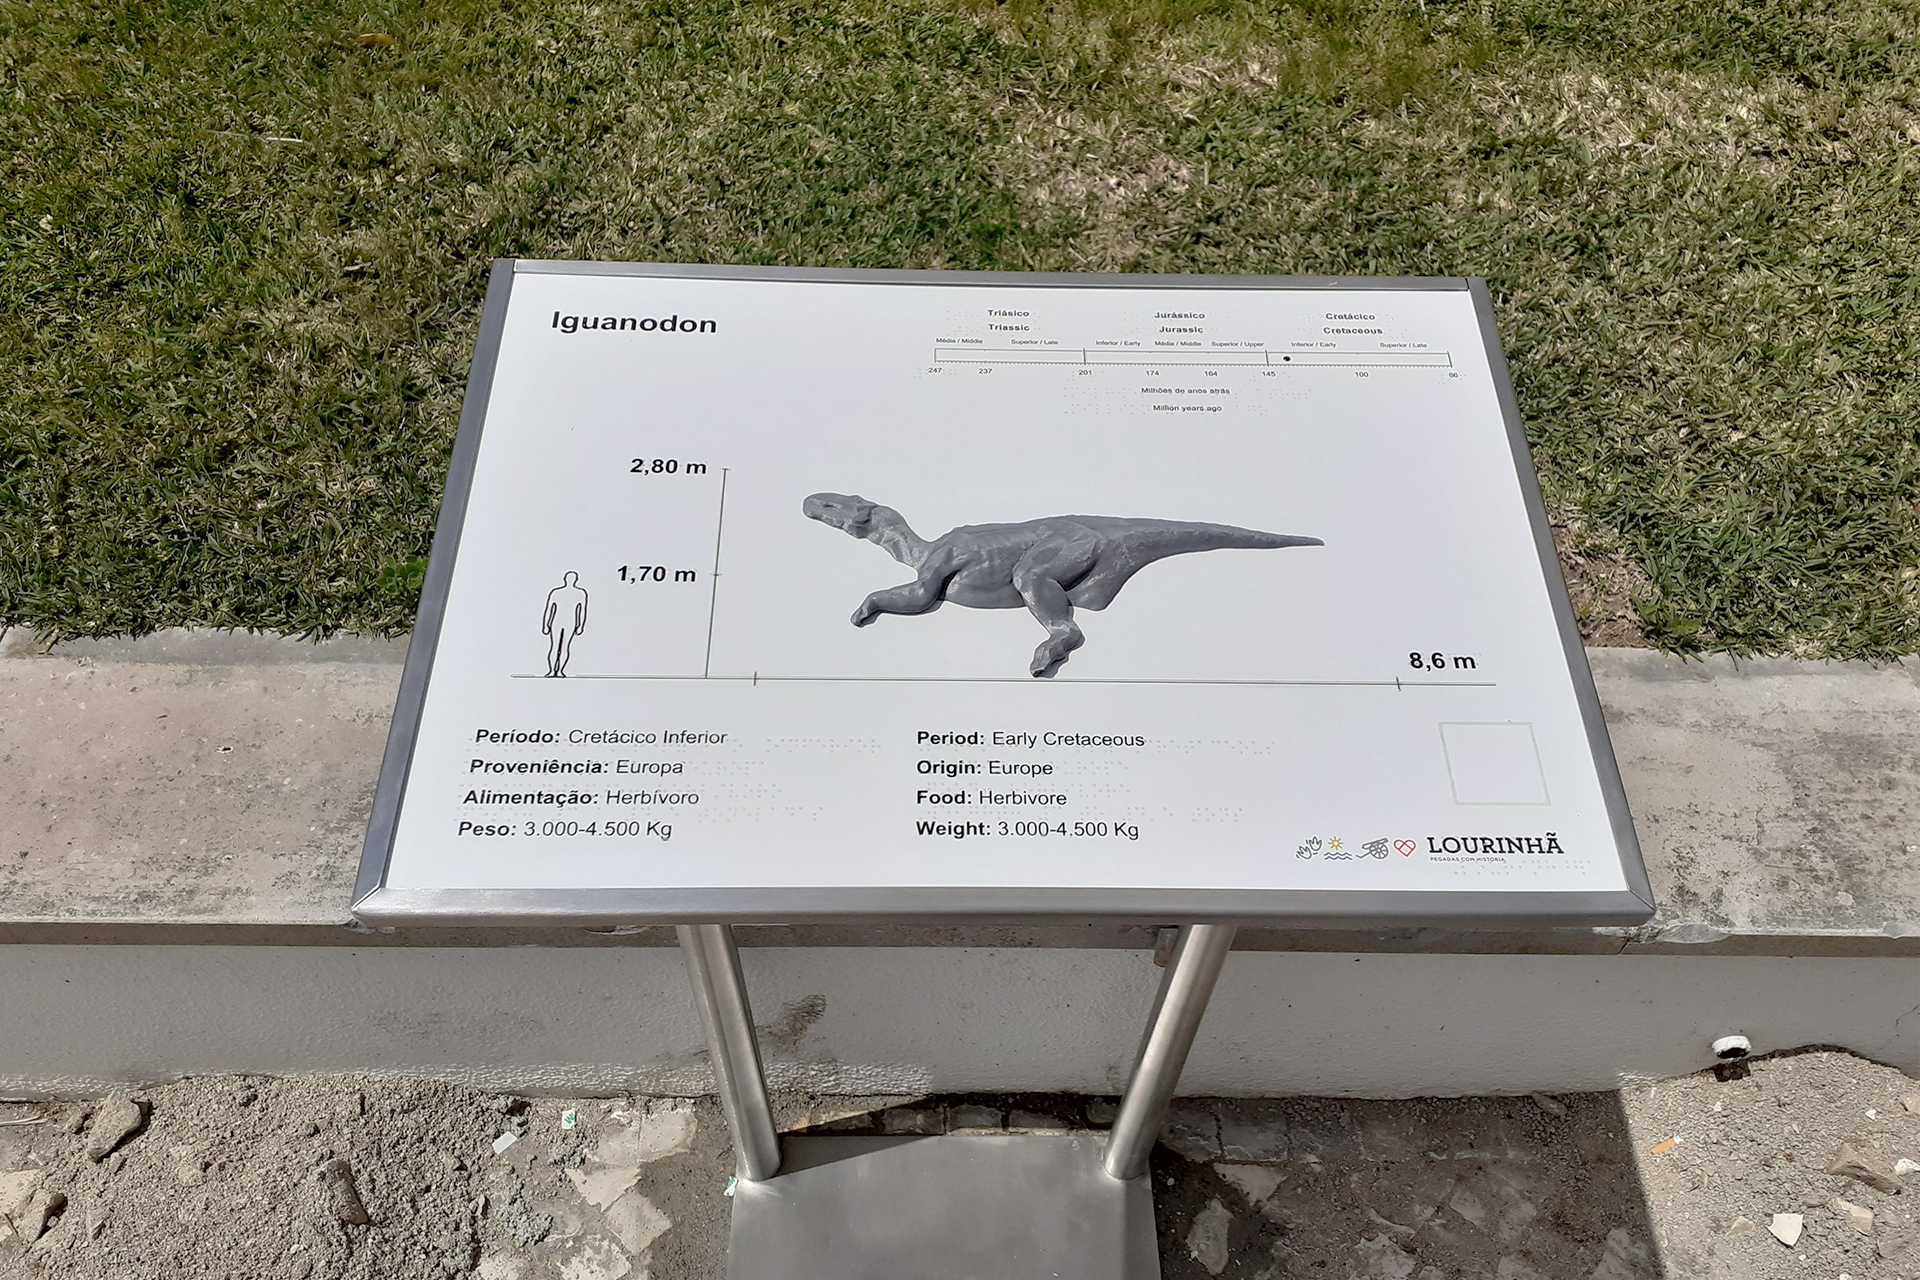 Placa Tátil iguanodon, Município da Lourinhã